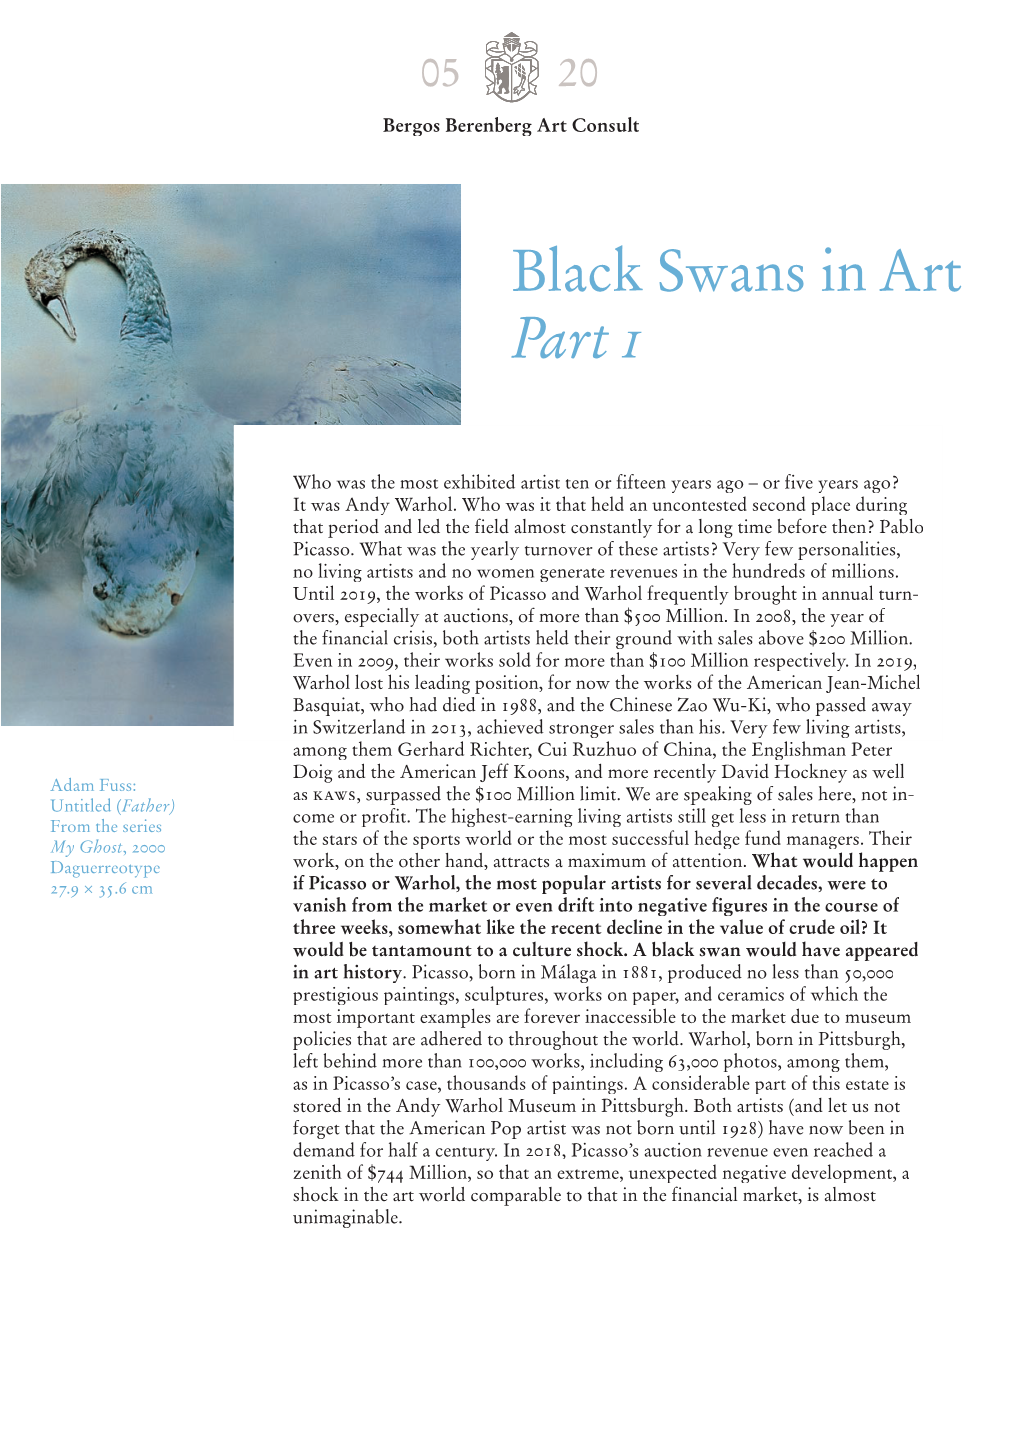 Black Swans in Art Part 1